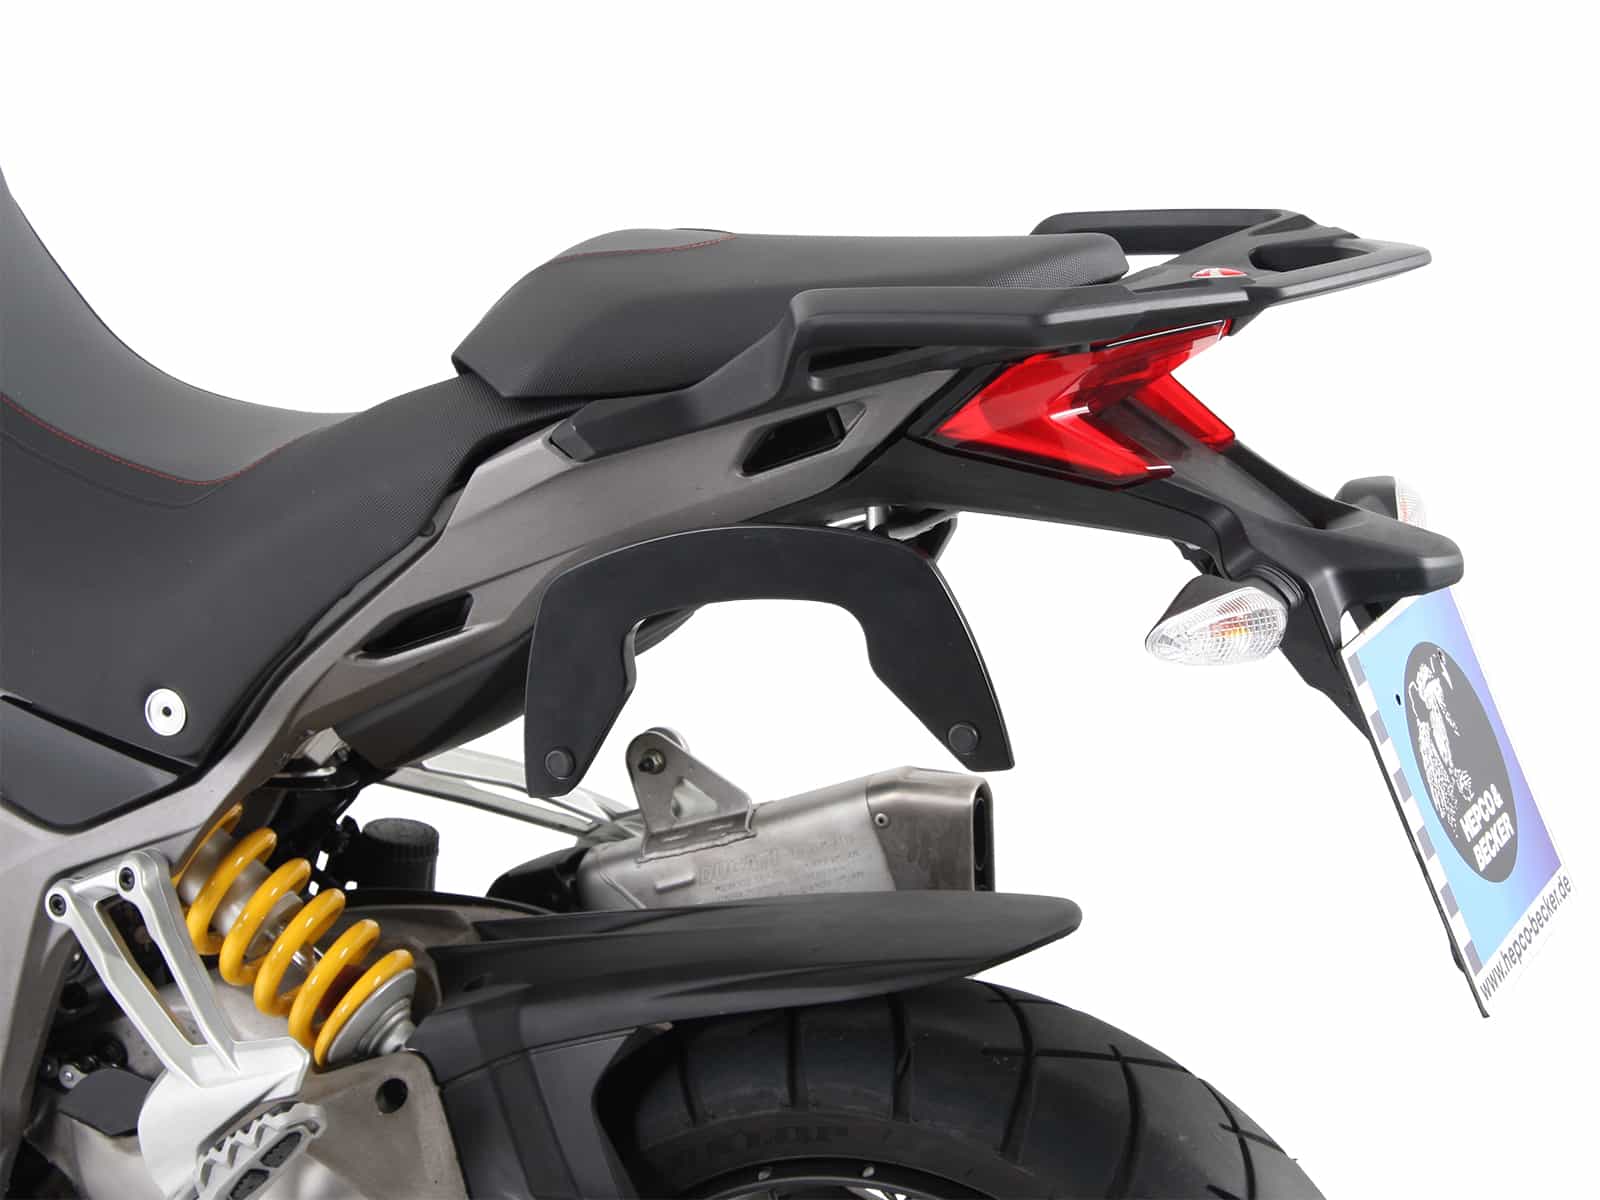 C-Bow sidecarrier for Ducati Multistrada 1200 Enduro (2016-2018)